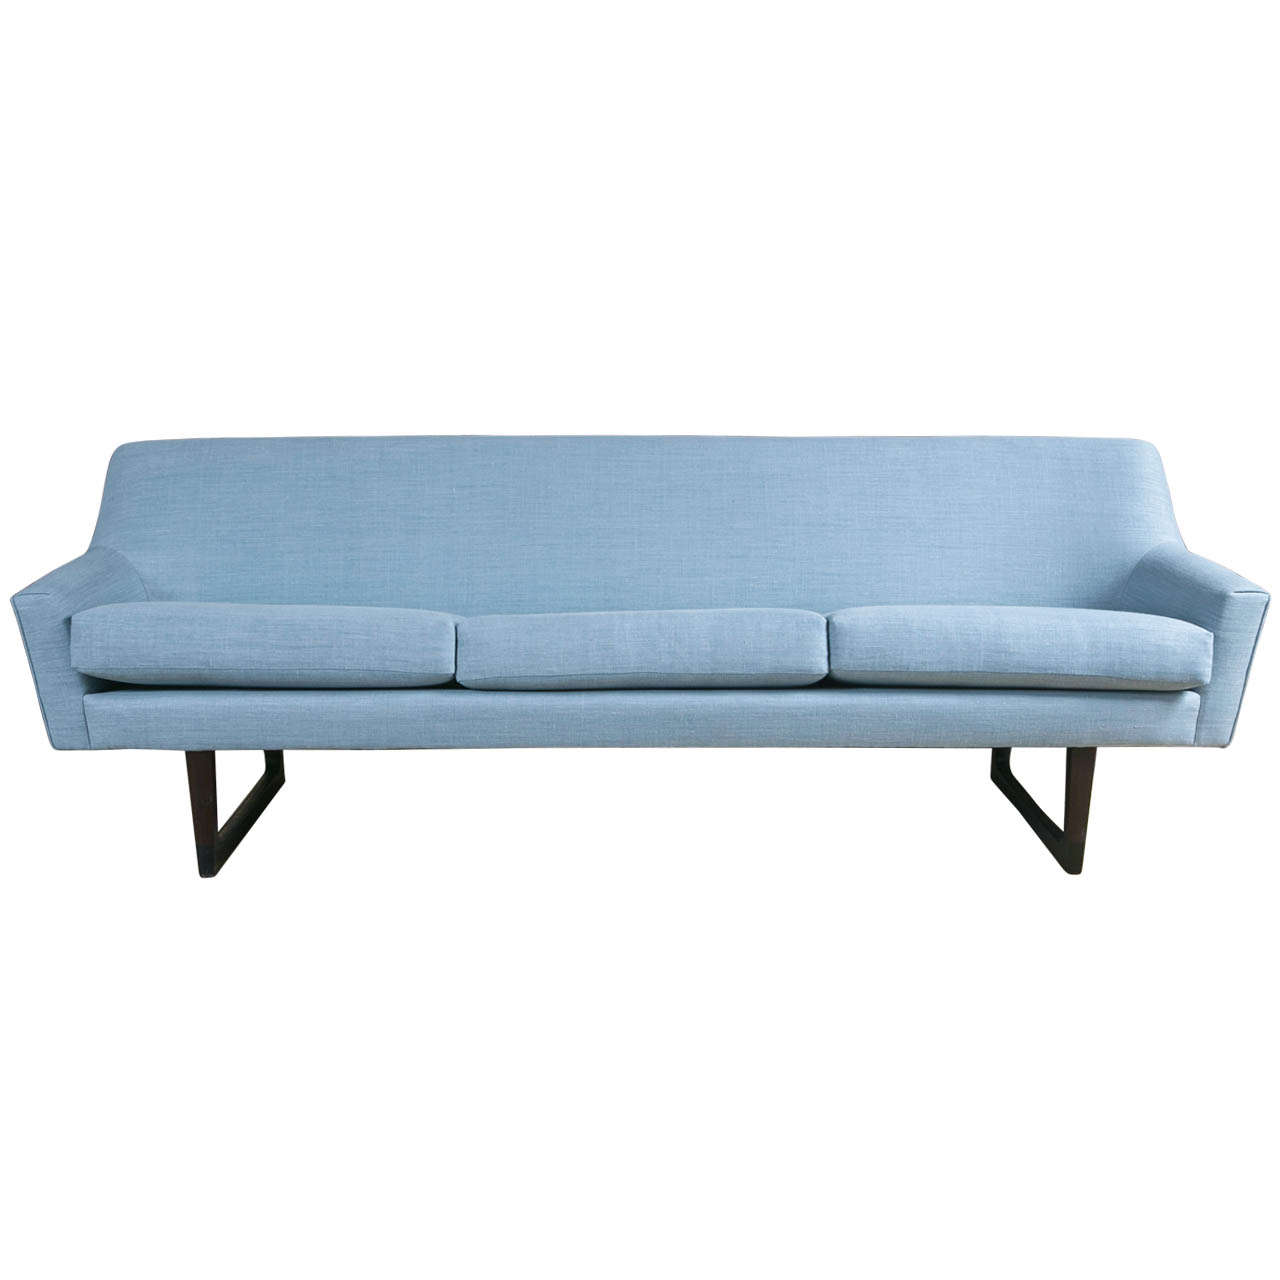 Mid-century Danish Modern Sofa For Sale